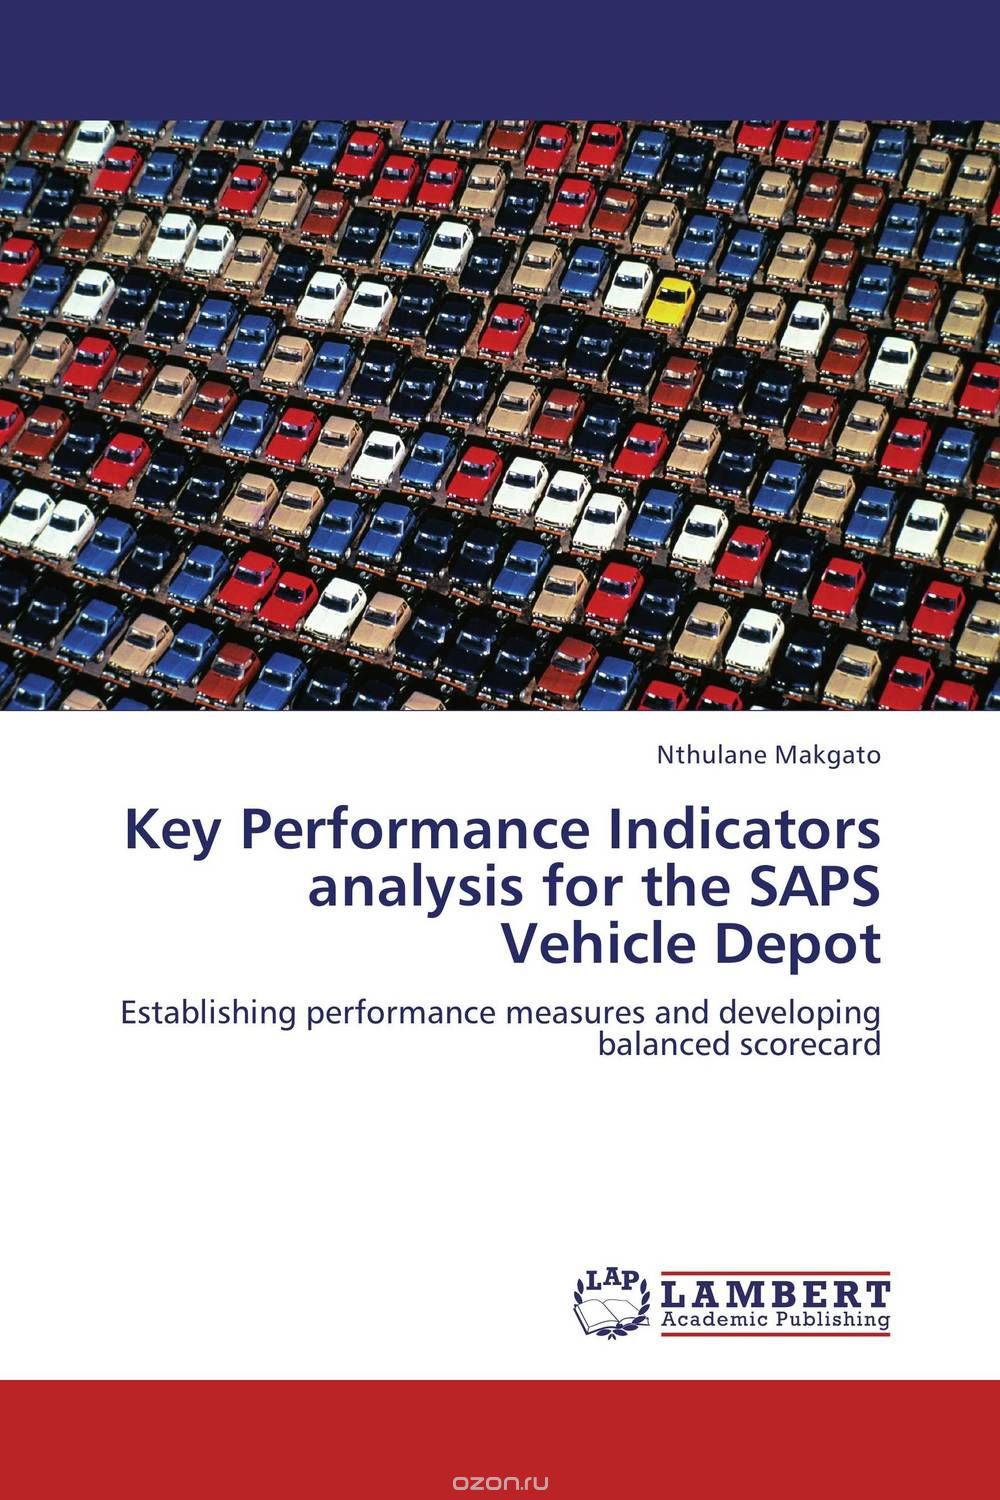 Скачать книгу "Key Performance Indicators analysis for the SAPS Vehicle Depot"